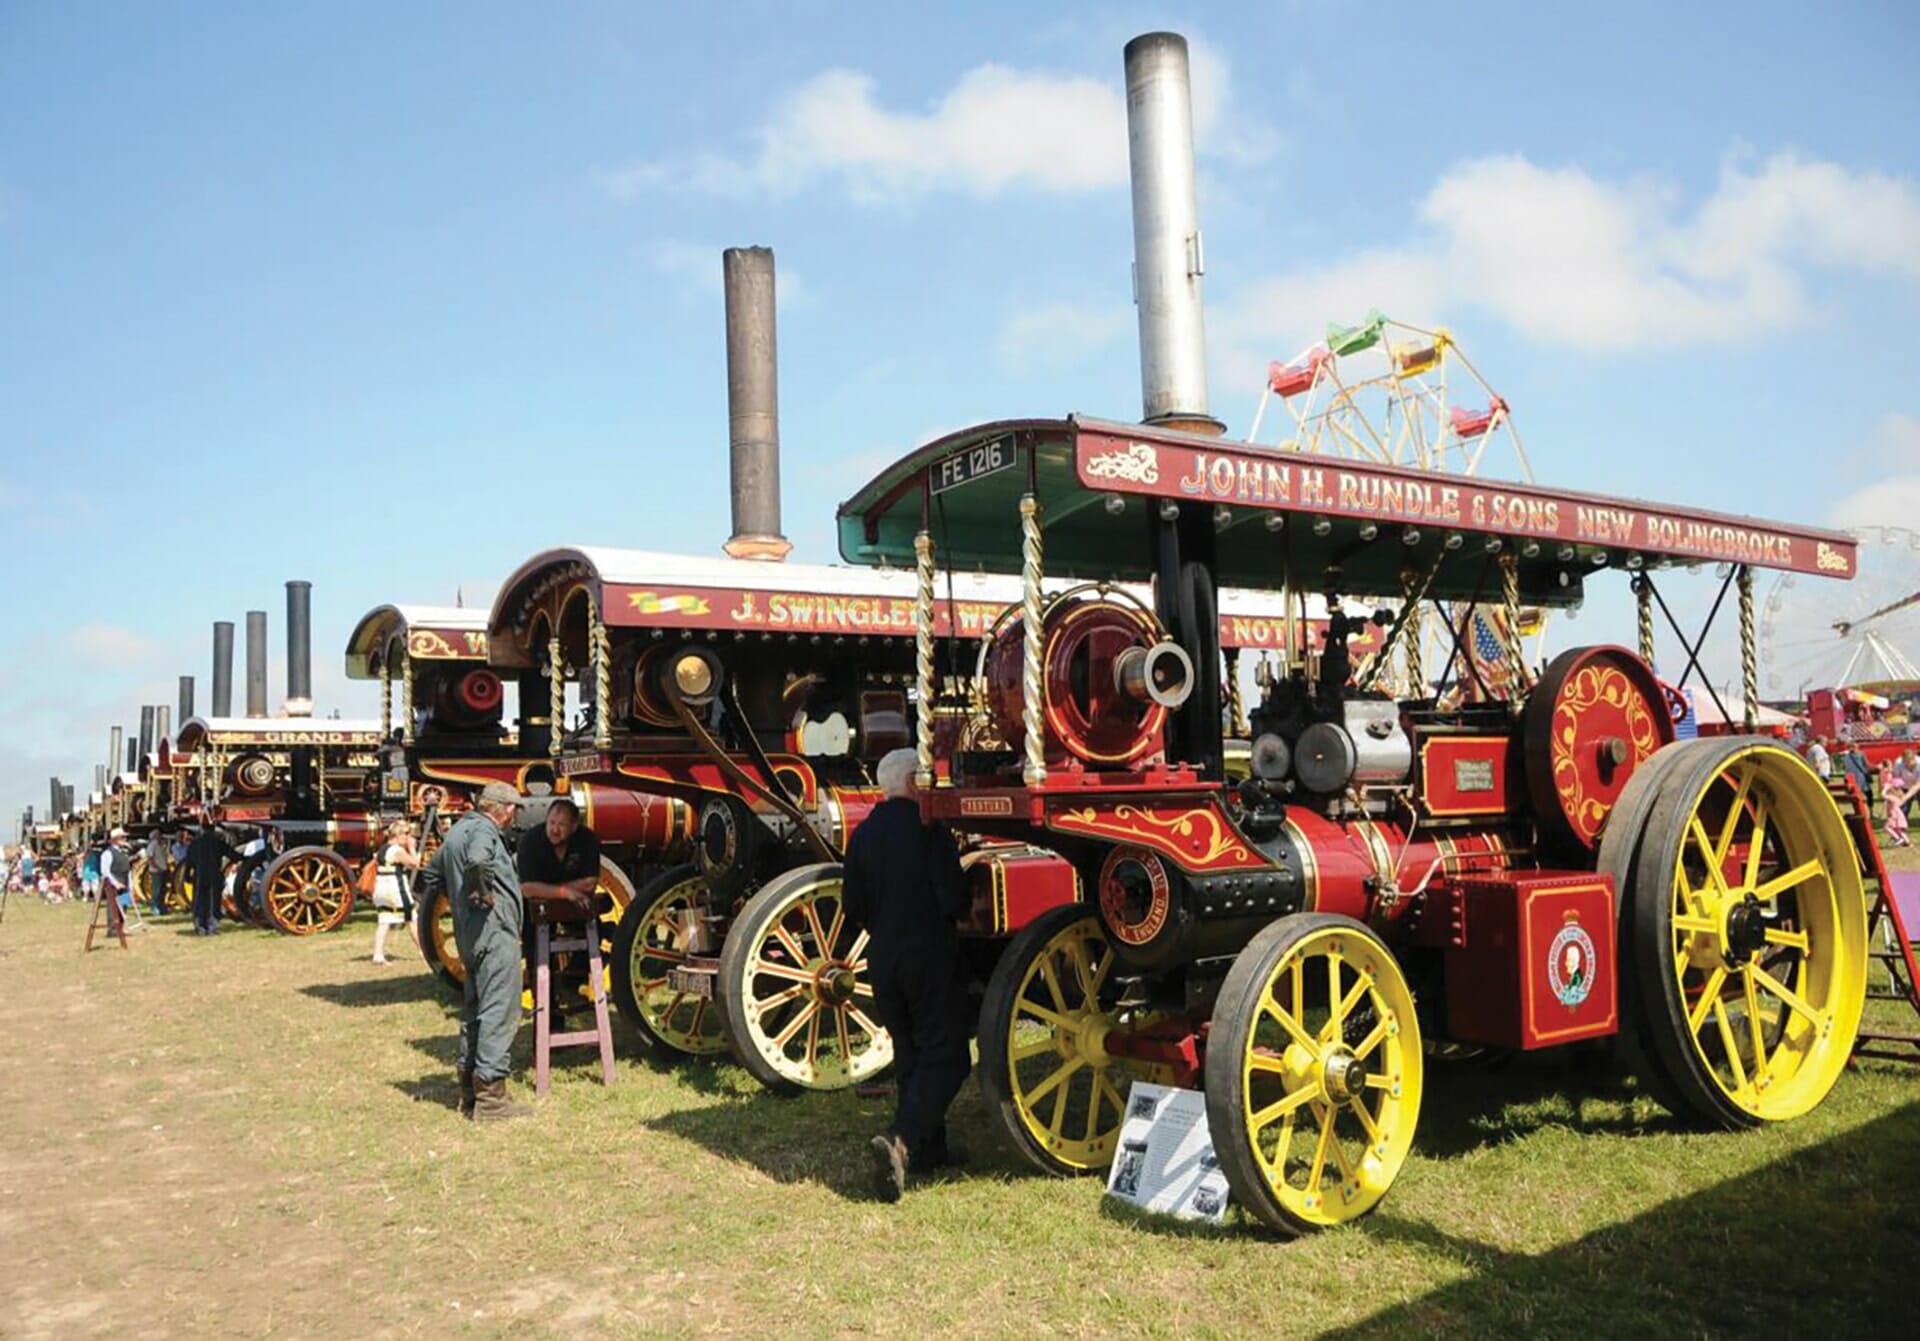 Dorset Steam Fair featured